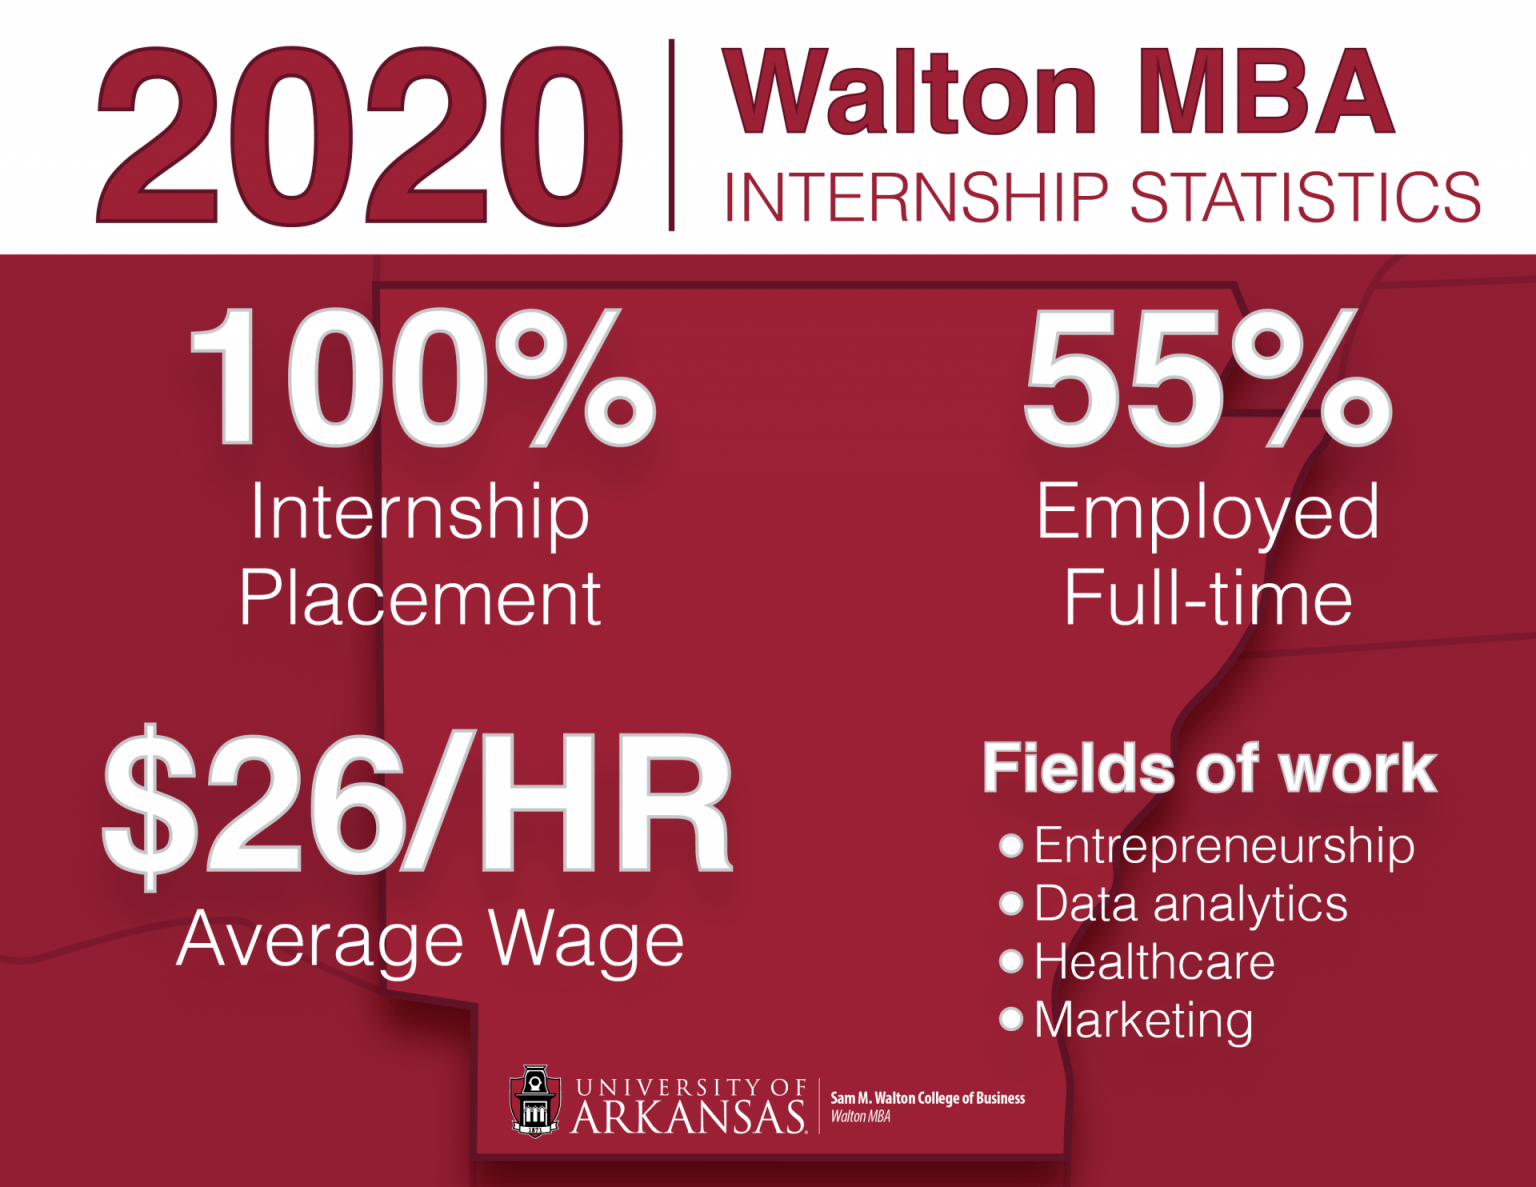 2020 Walton MBA Internship statistics